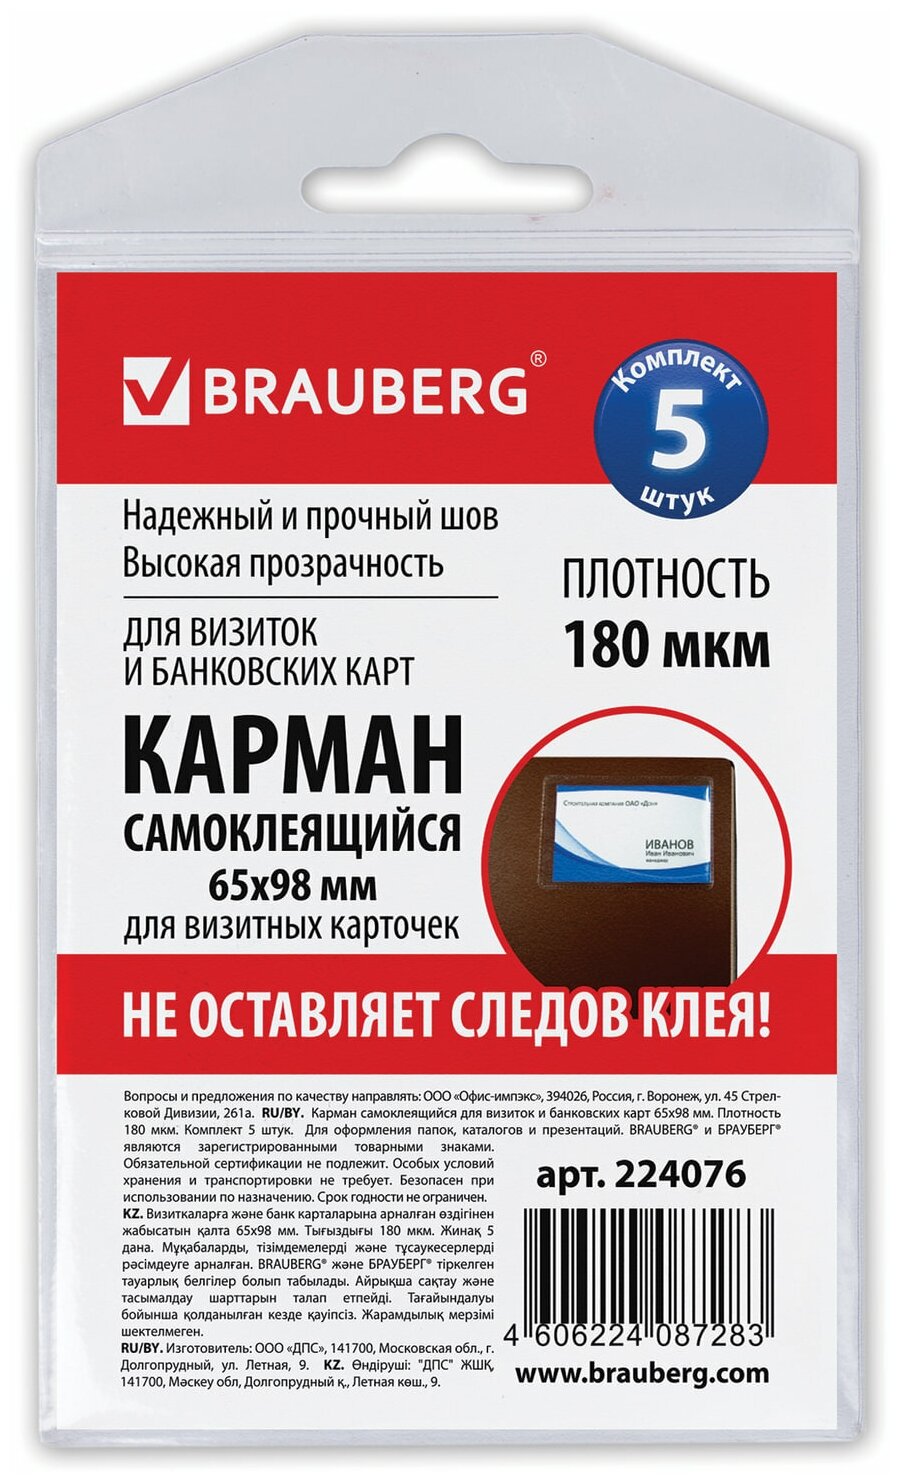 Карманы самоклеящиеся Brauberg под визитные карточки (65х98 мм), 5 штук (224076)